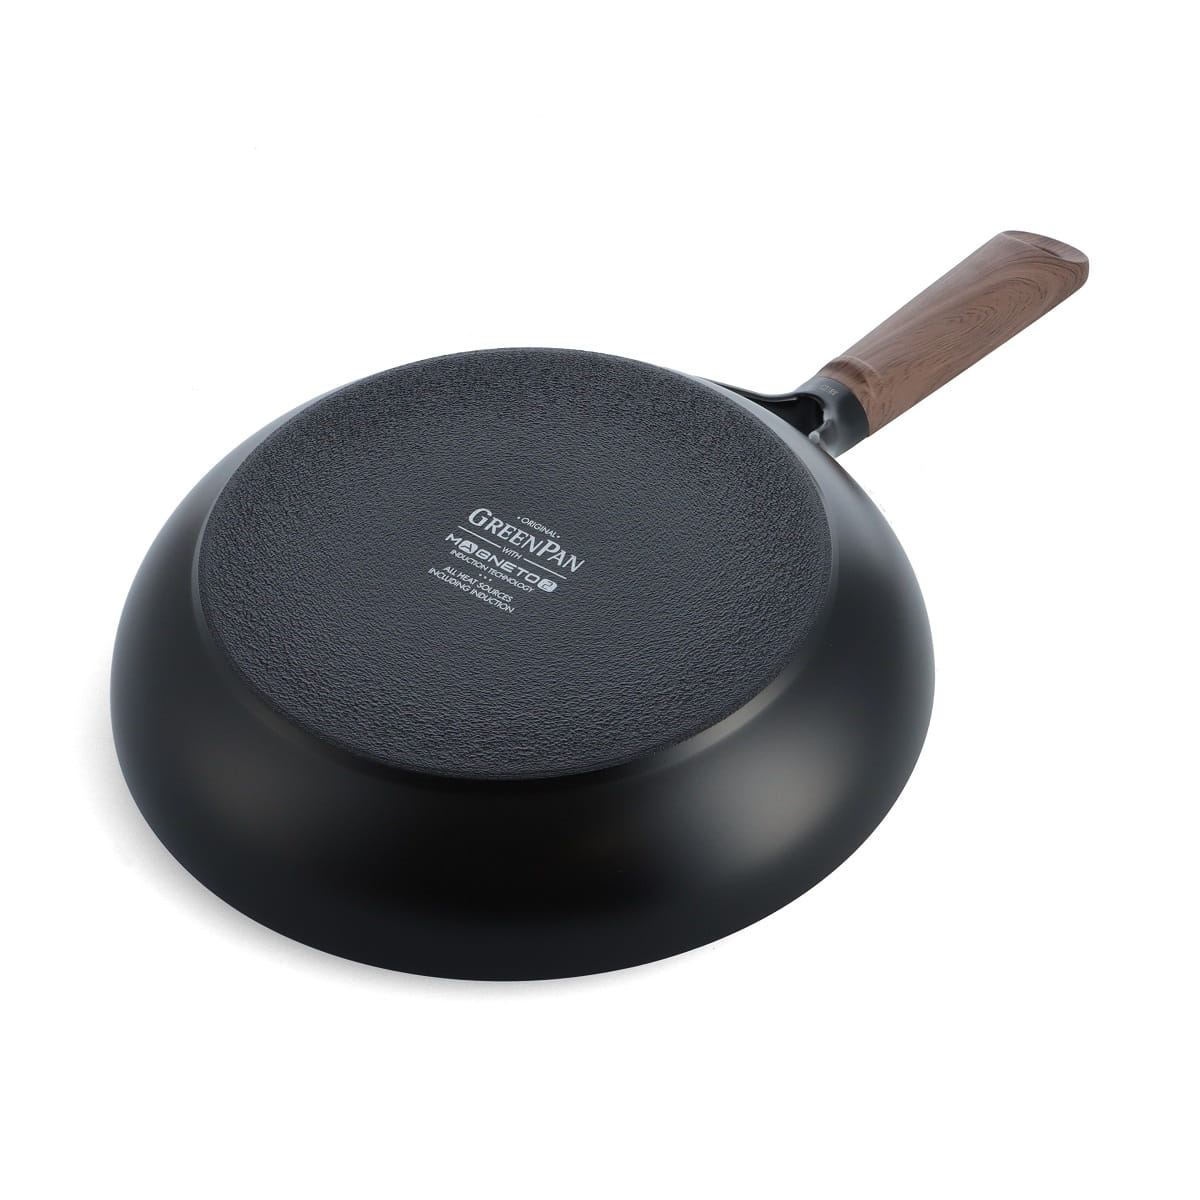 CC006441-001 - Eco Smartshape Frying Pan, Dark Wood - 24cm - Product Image 3